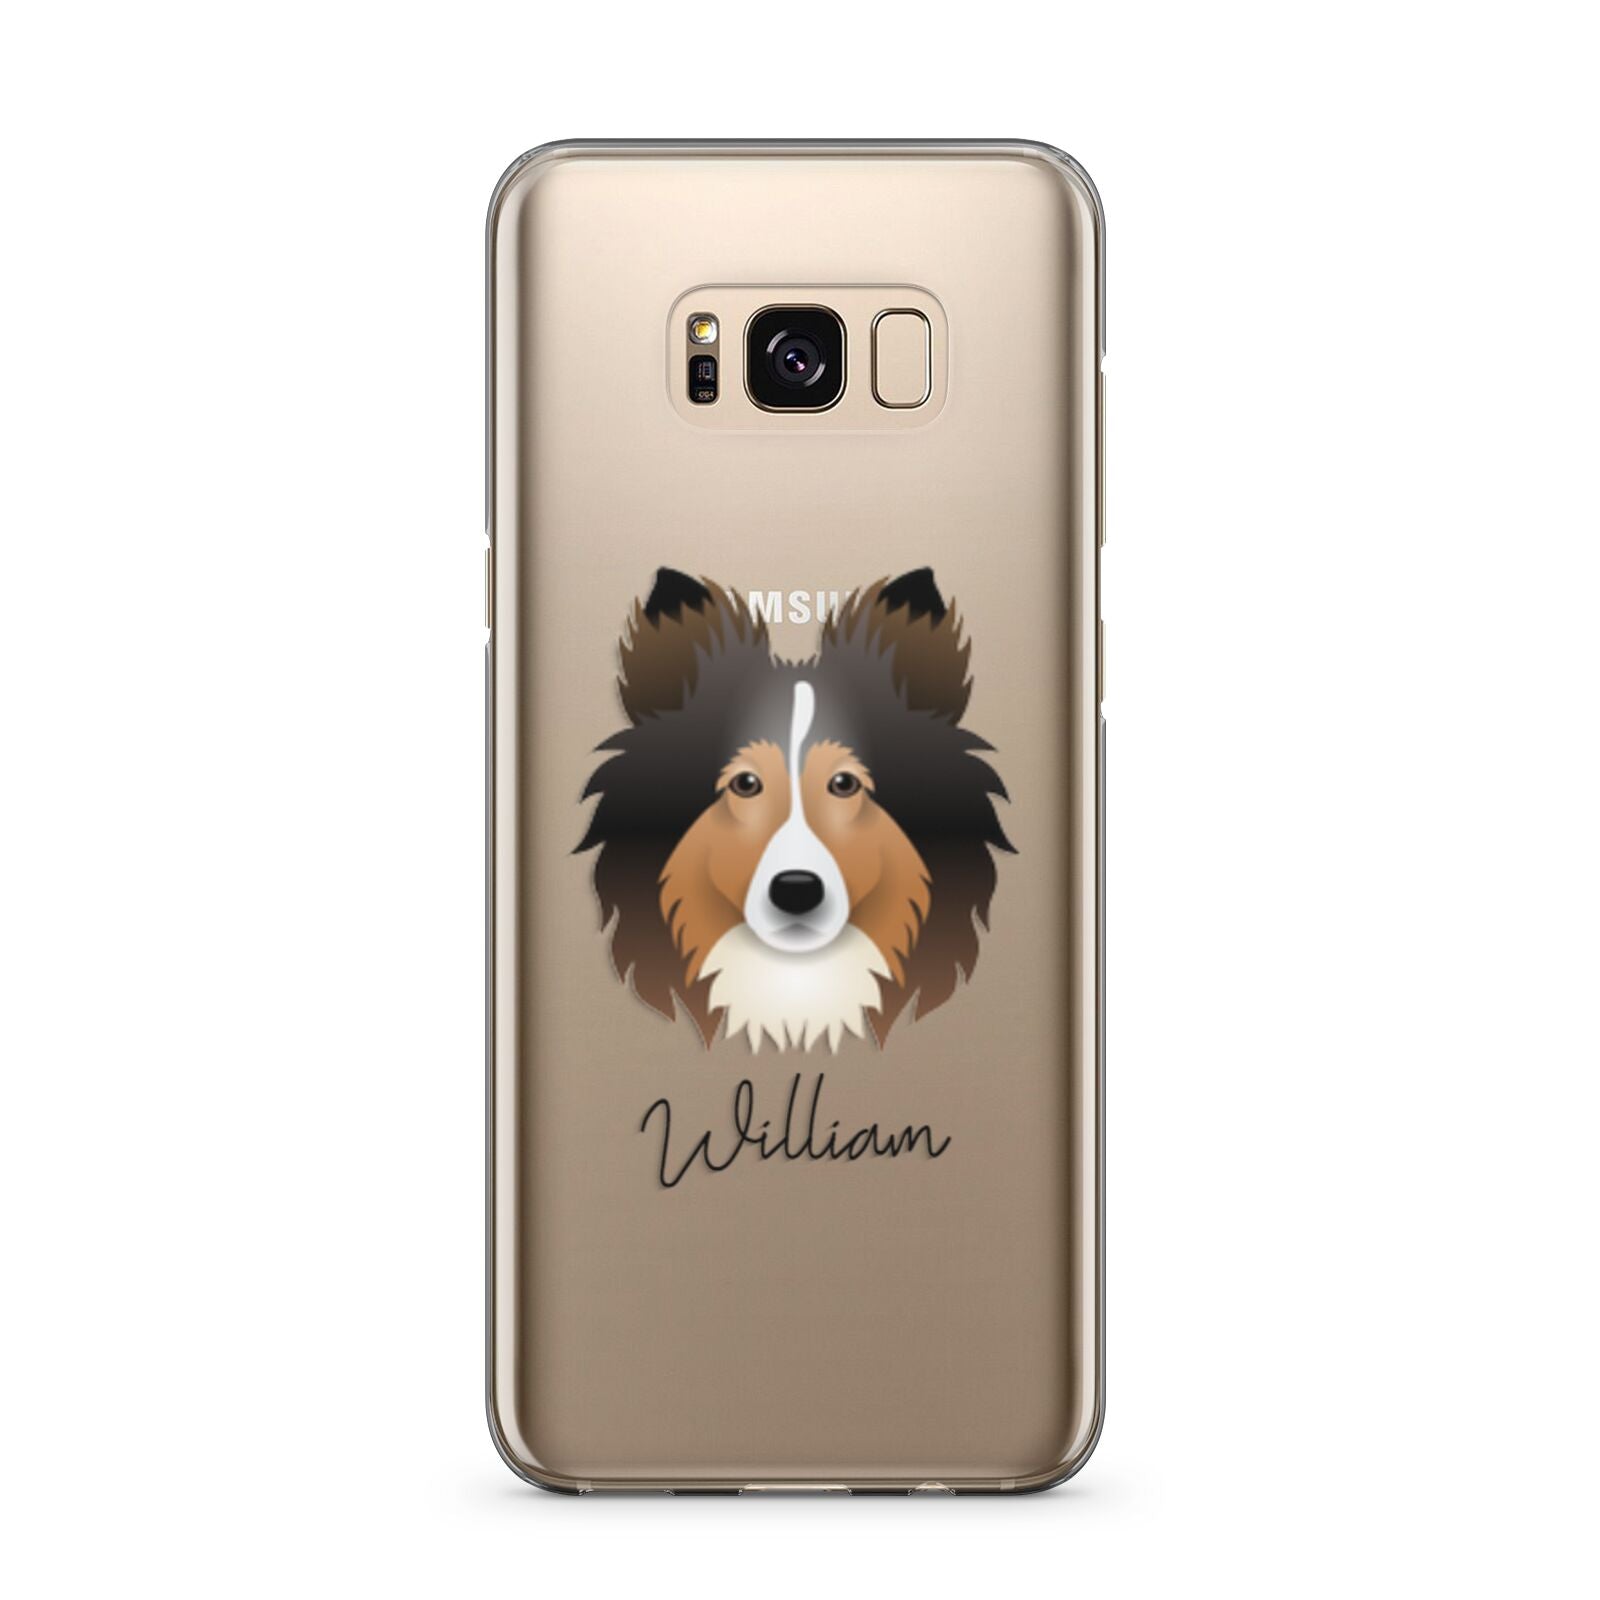 Shetland Sheepdog Personalised Samsung Galaxy S8 Plus Case